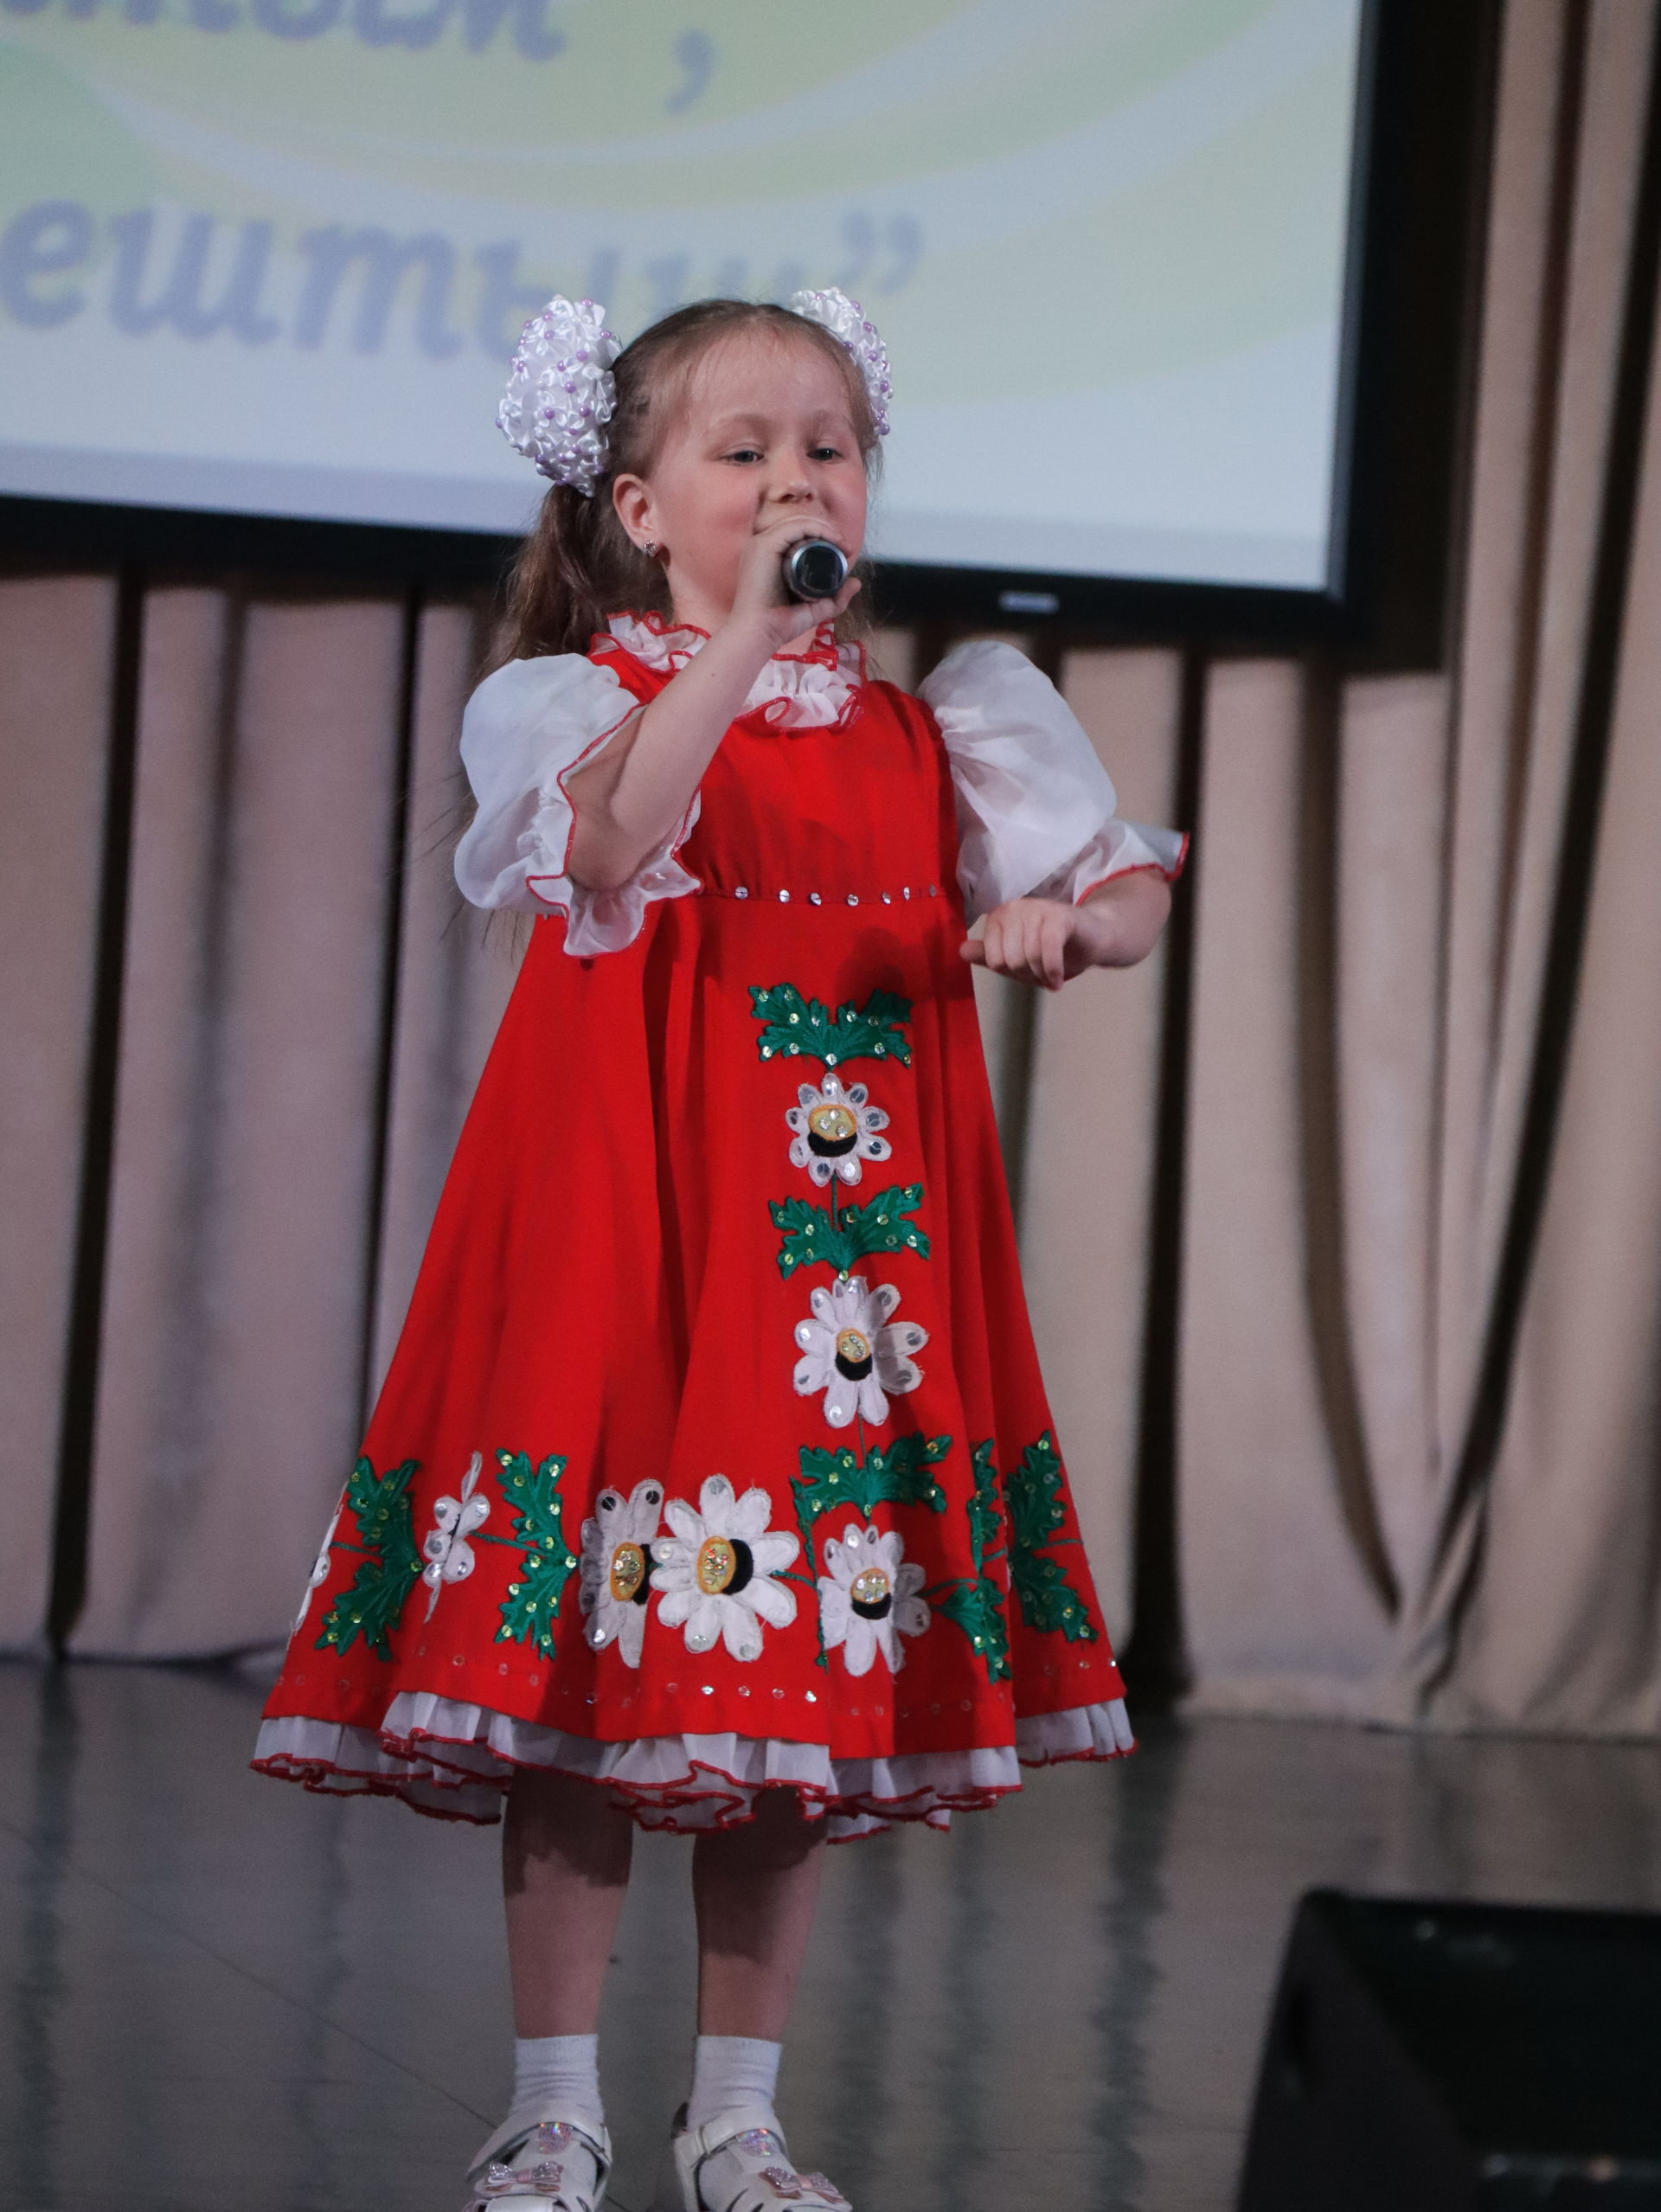 Гала-концерт VI районного детского фестиваля народного творчества «Росток»